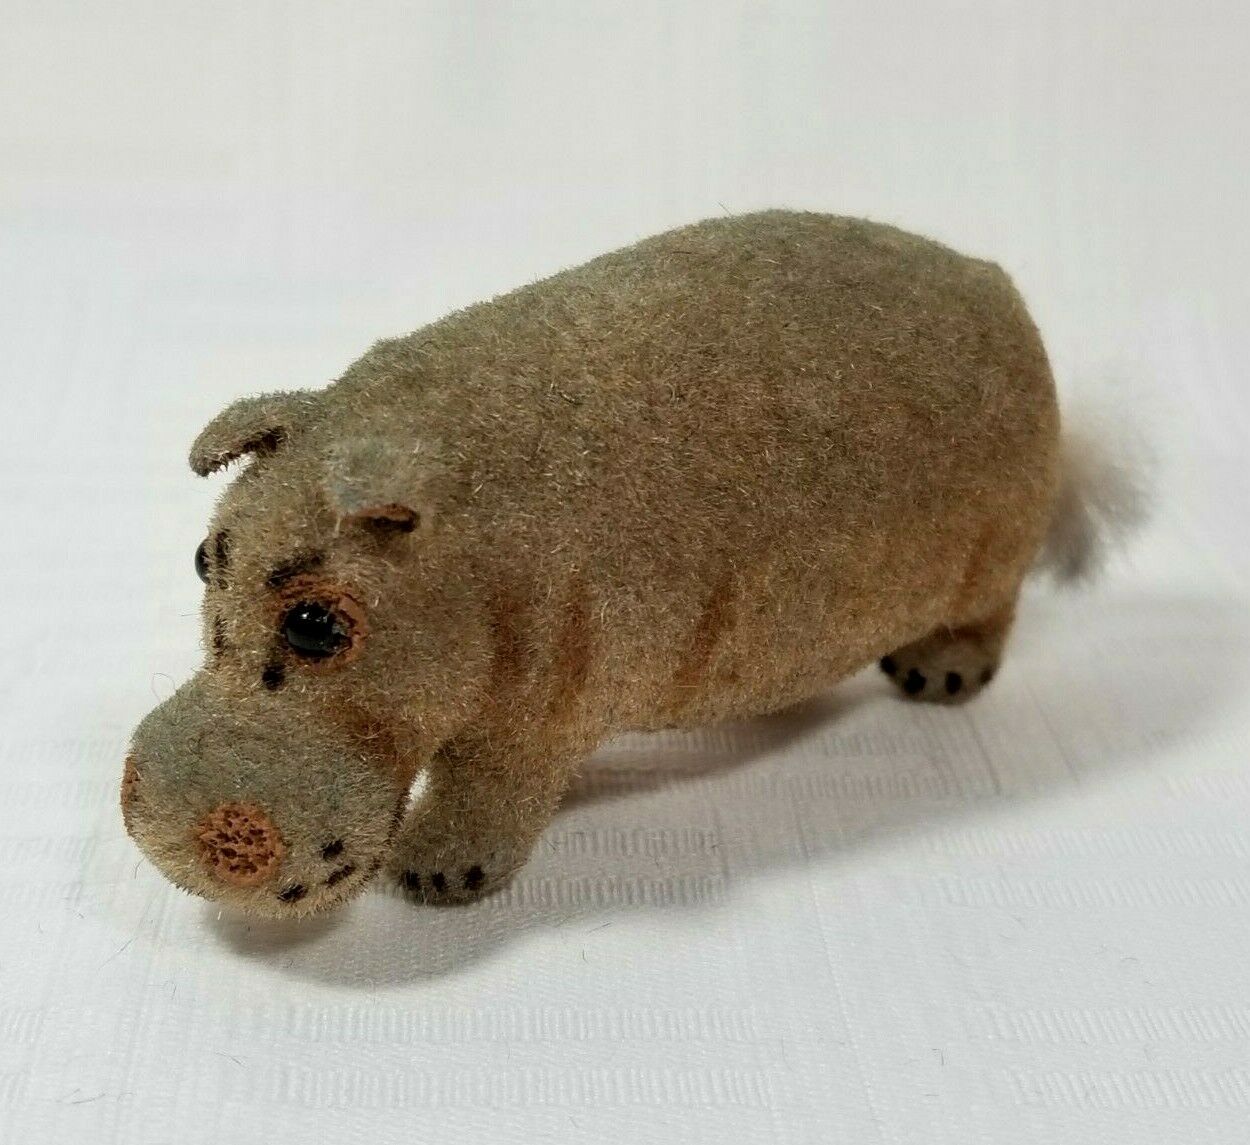 Wagner Kunstlerschutz Hippopotamus Flocked Toy Figurine Germany